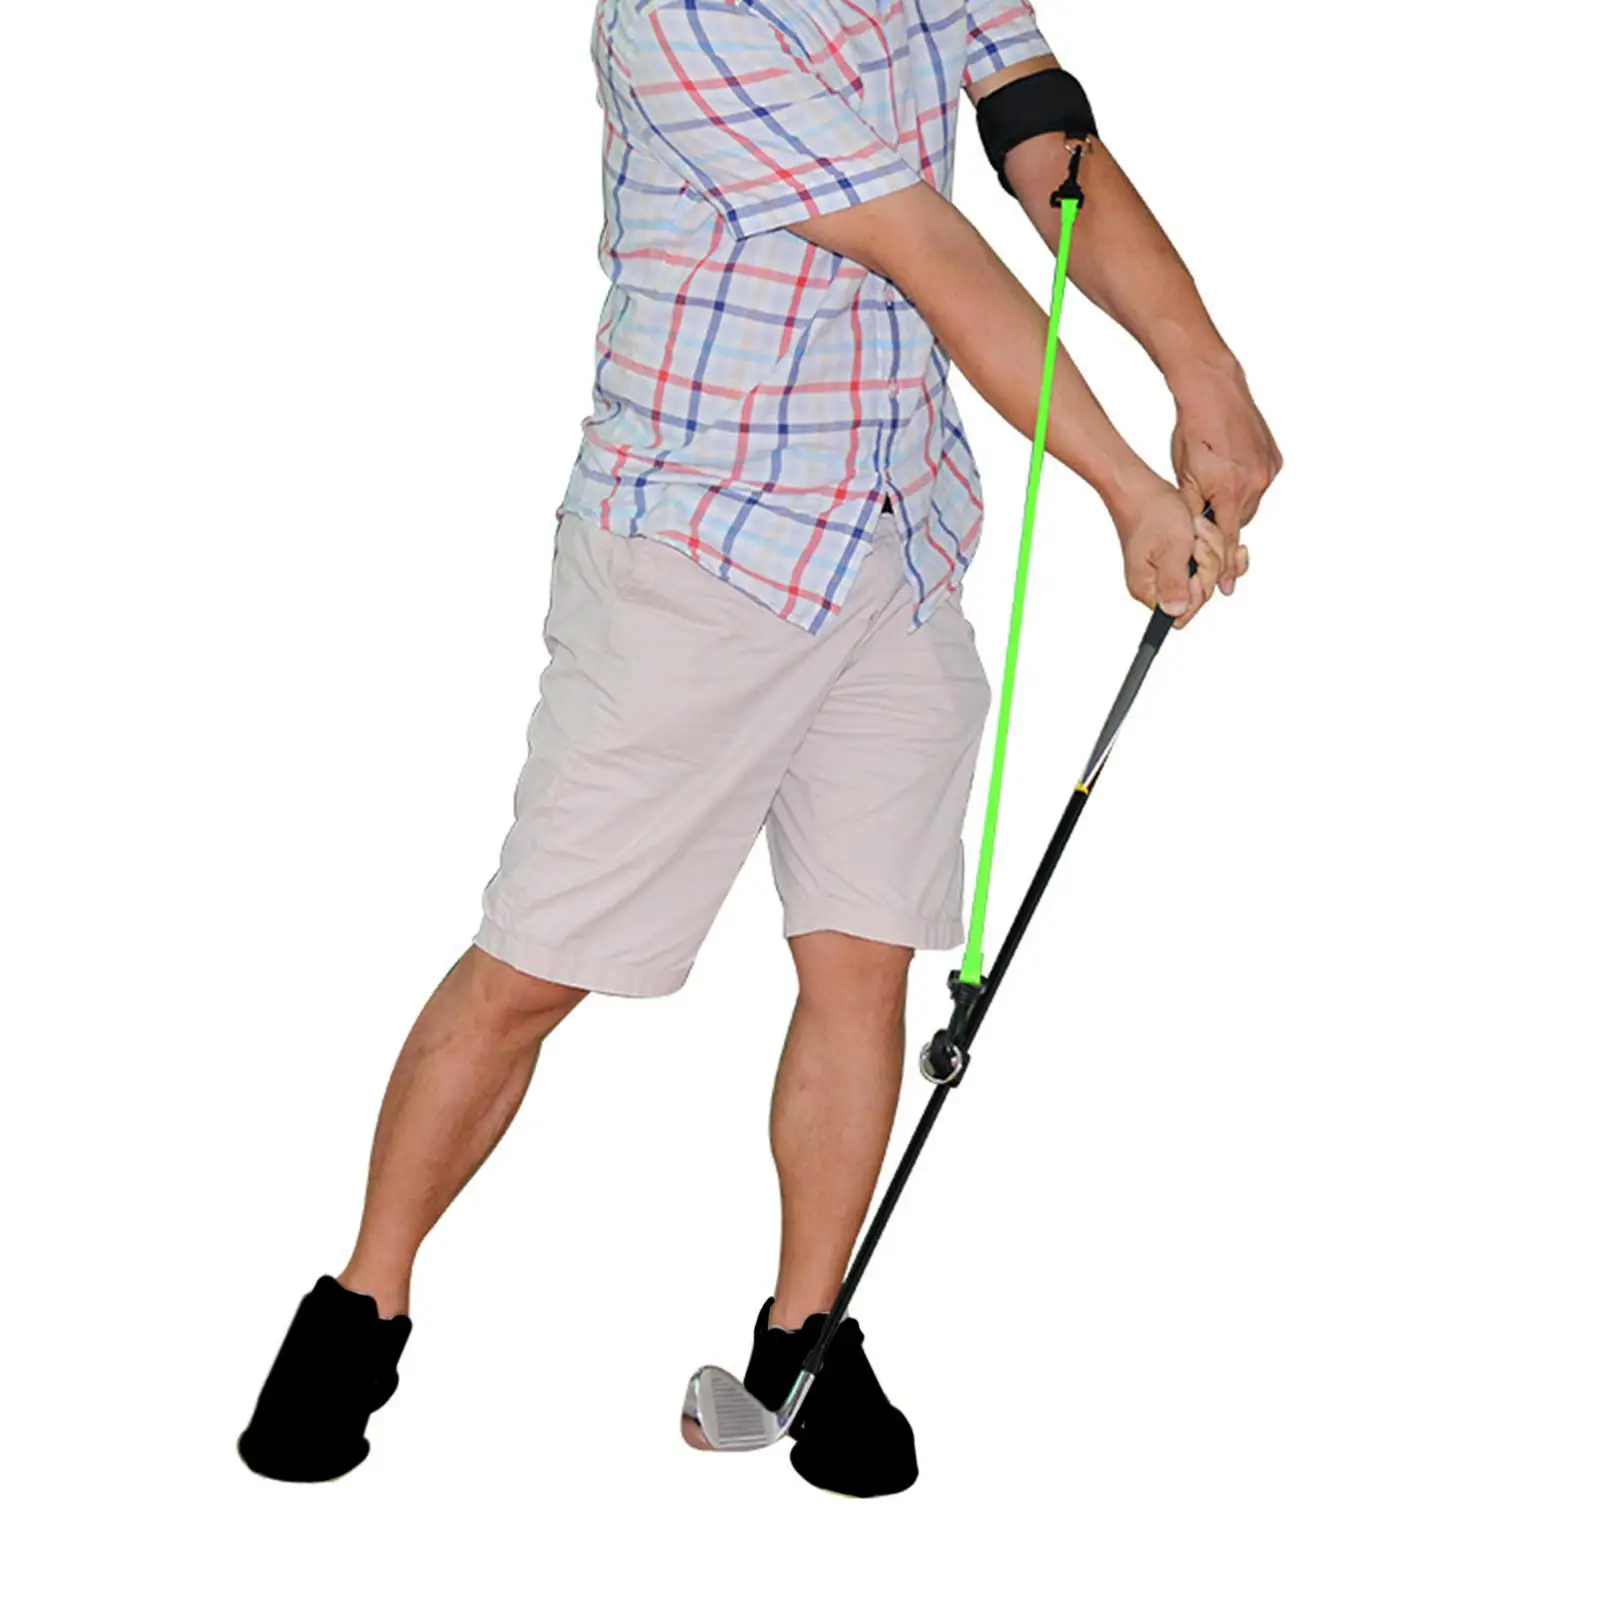 Golf Swing Trainer, Lightweight Easily Install for Golf Club